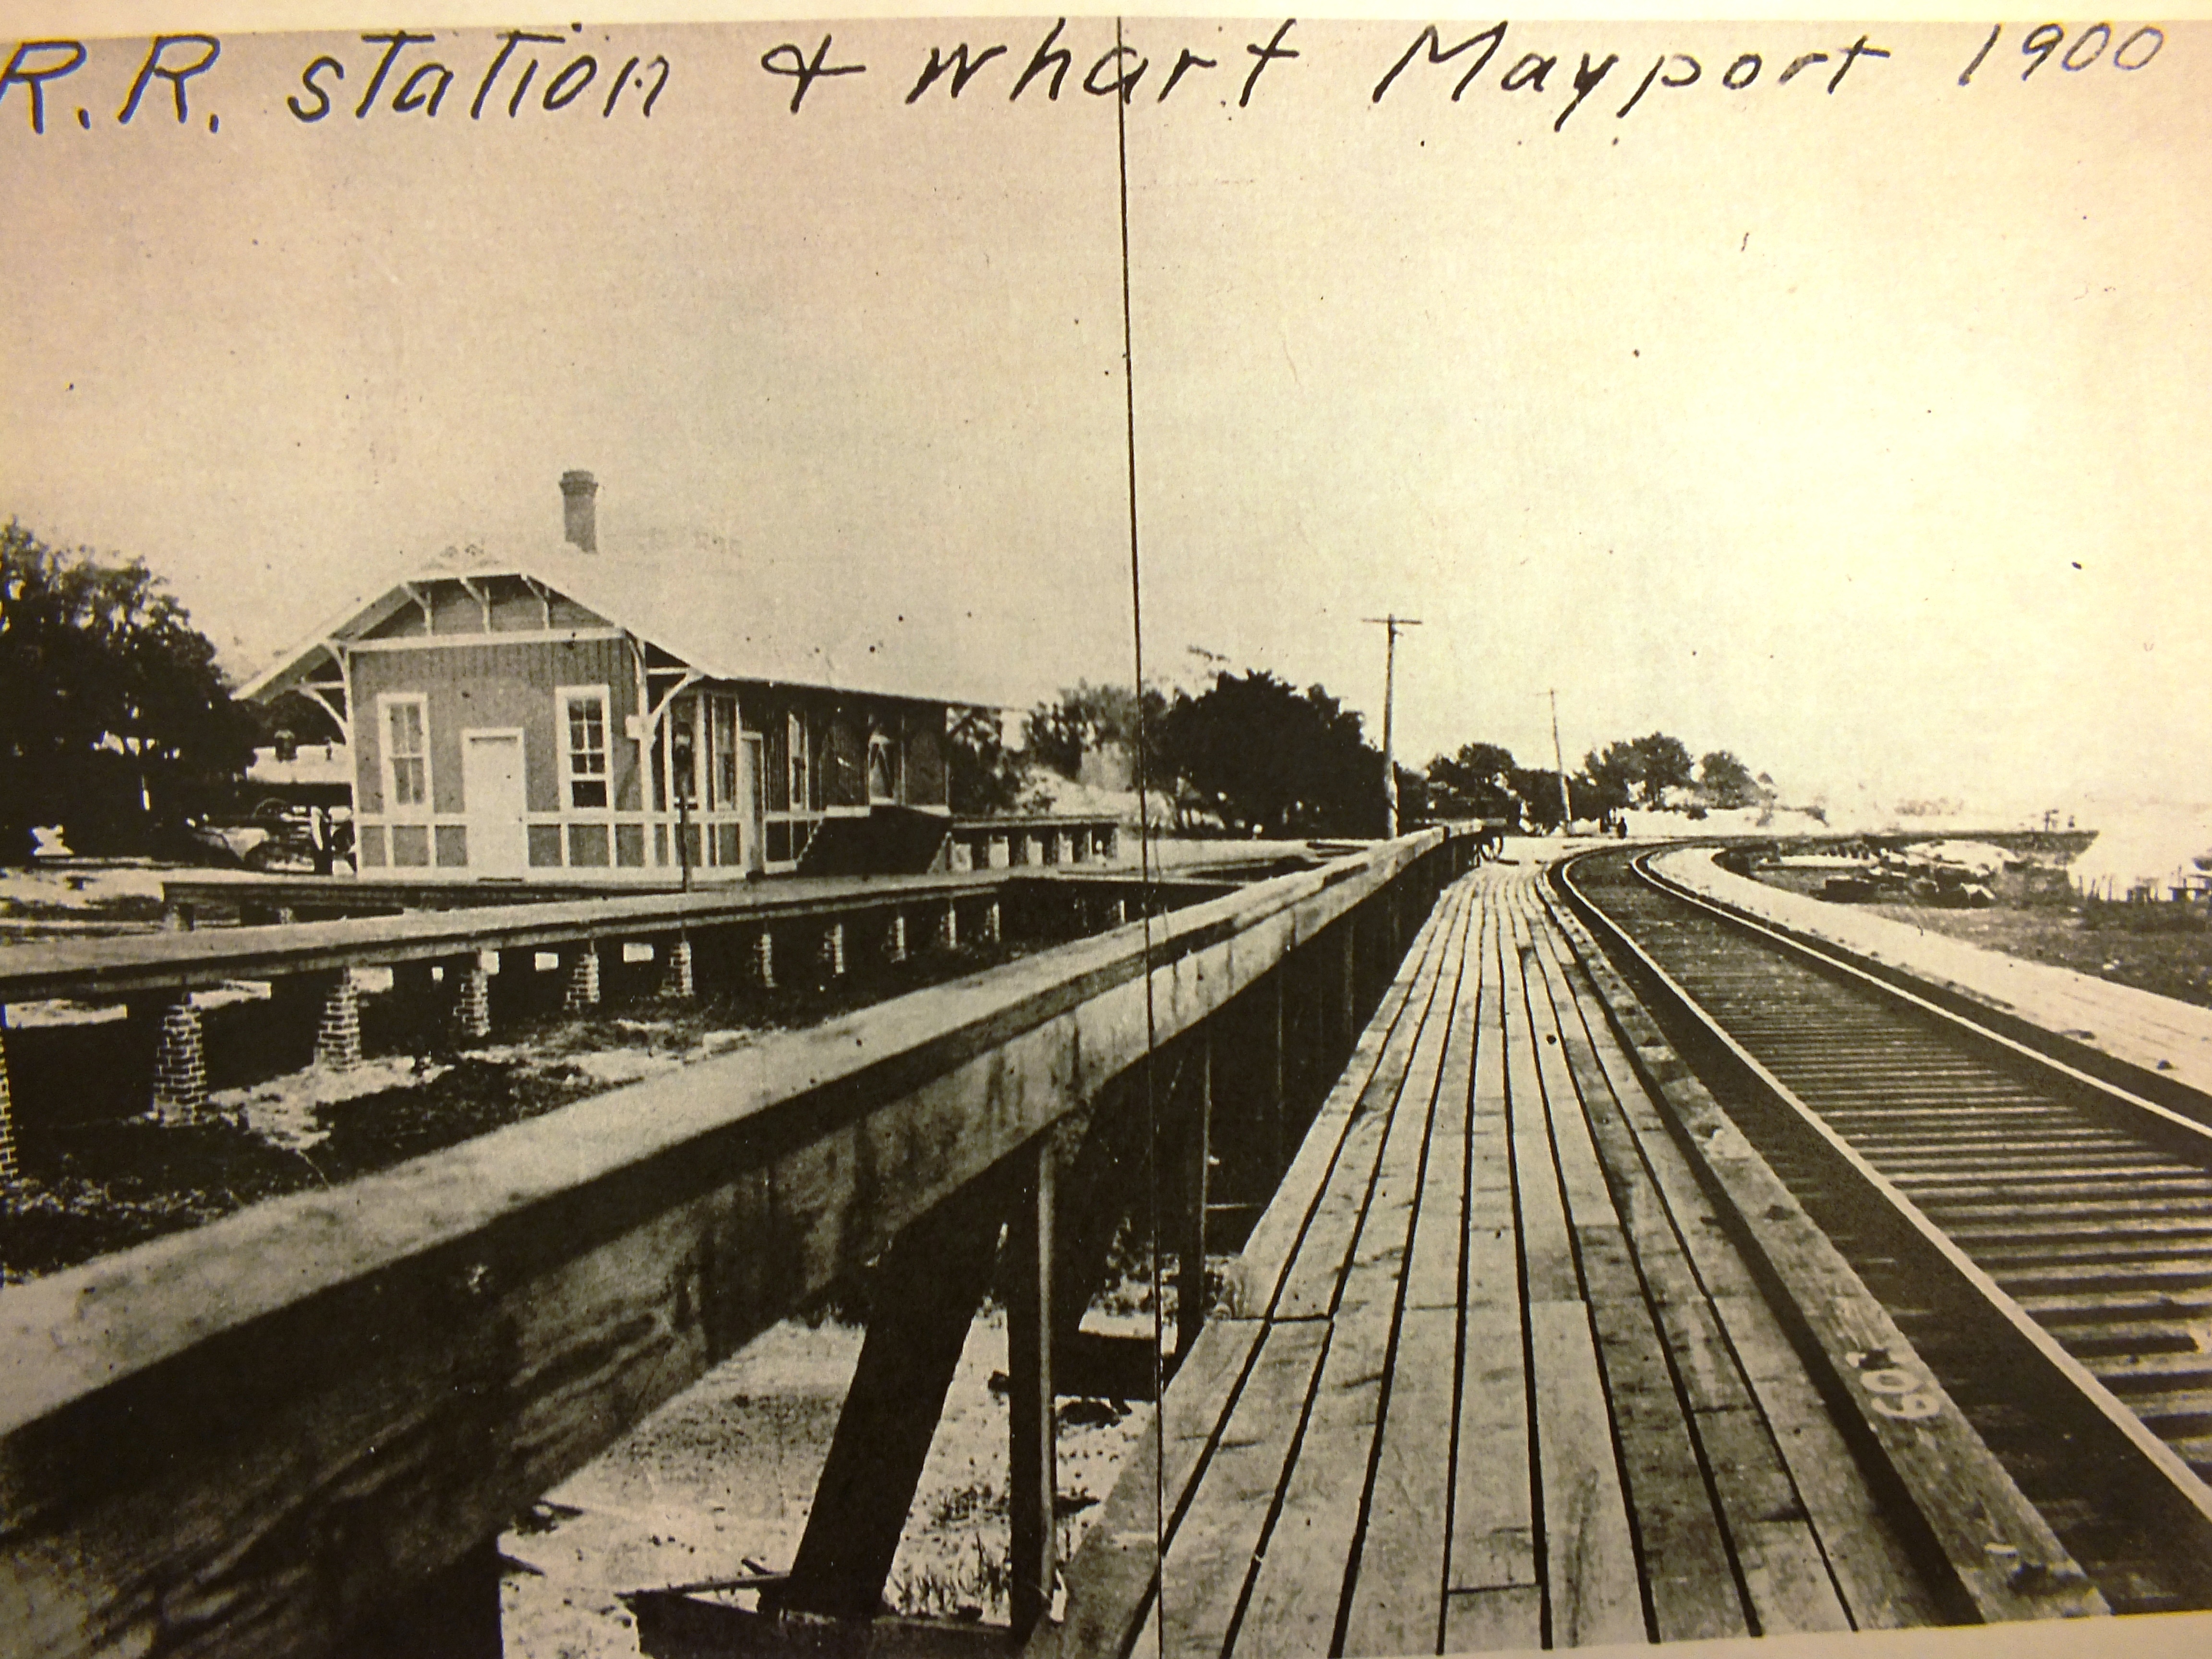 Depot in Mayport in 1900.